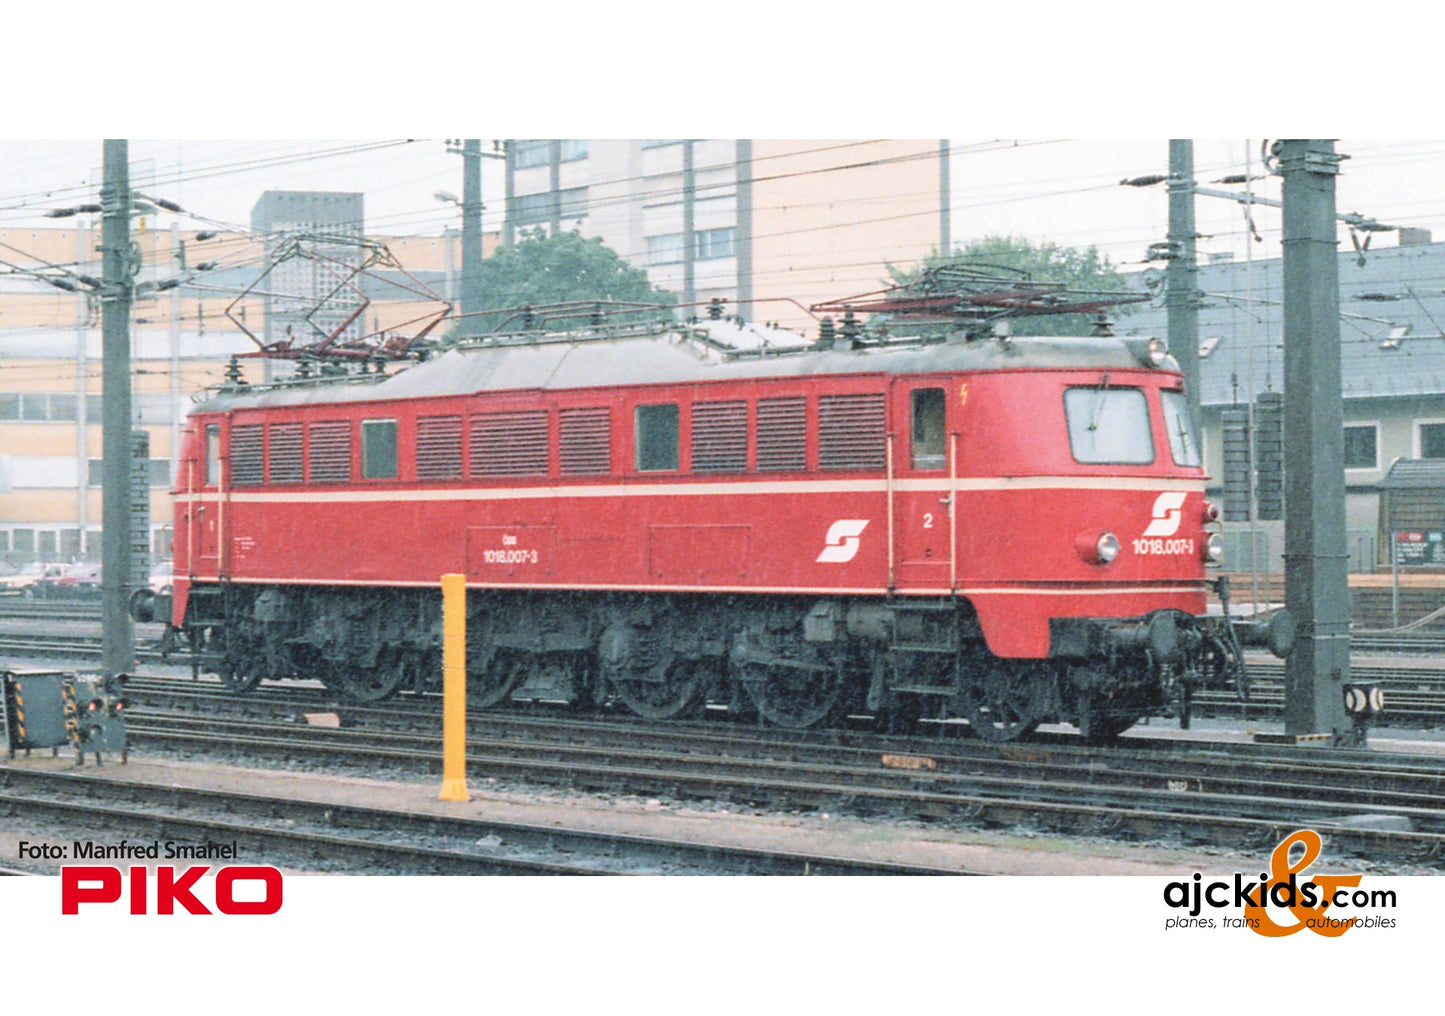 Piko 51142 - Rh 1018 Electric Locomotive OBB IV 